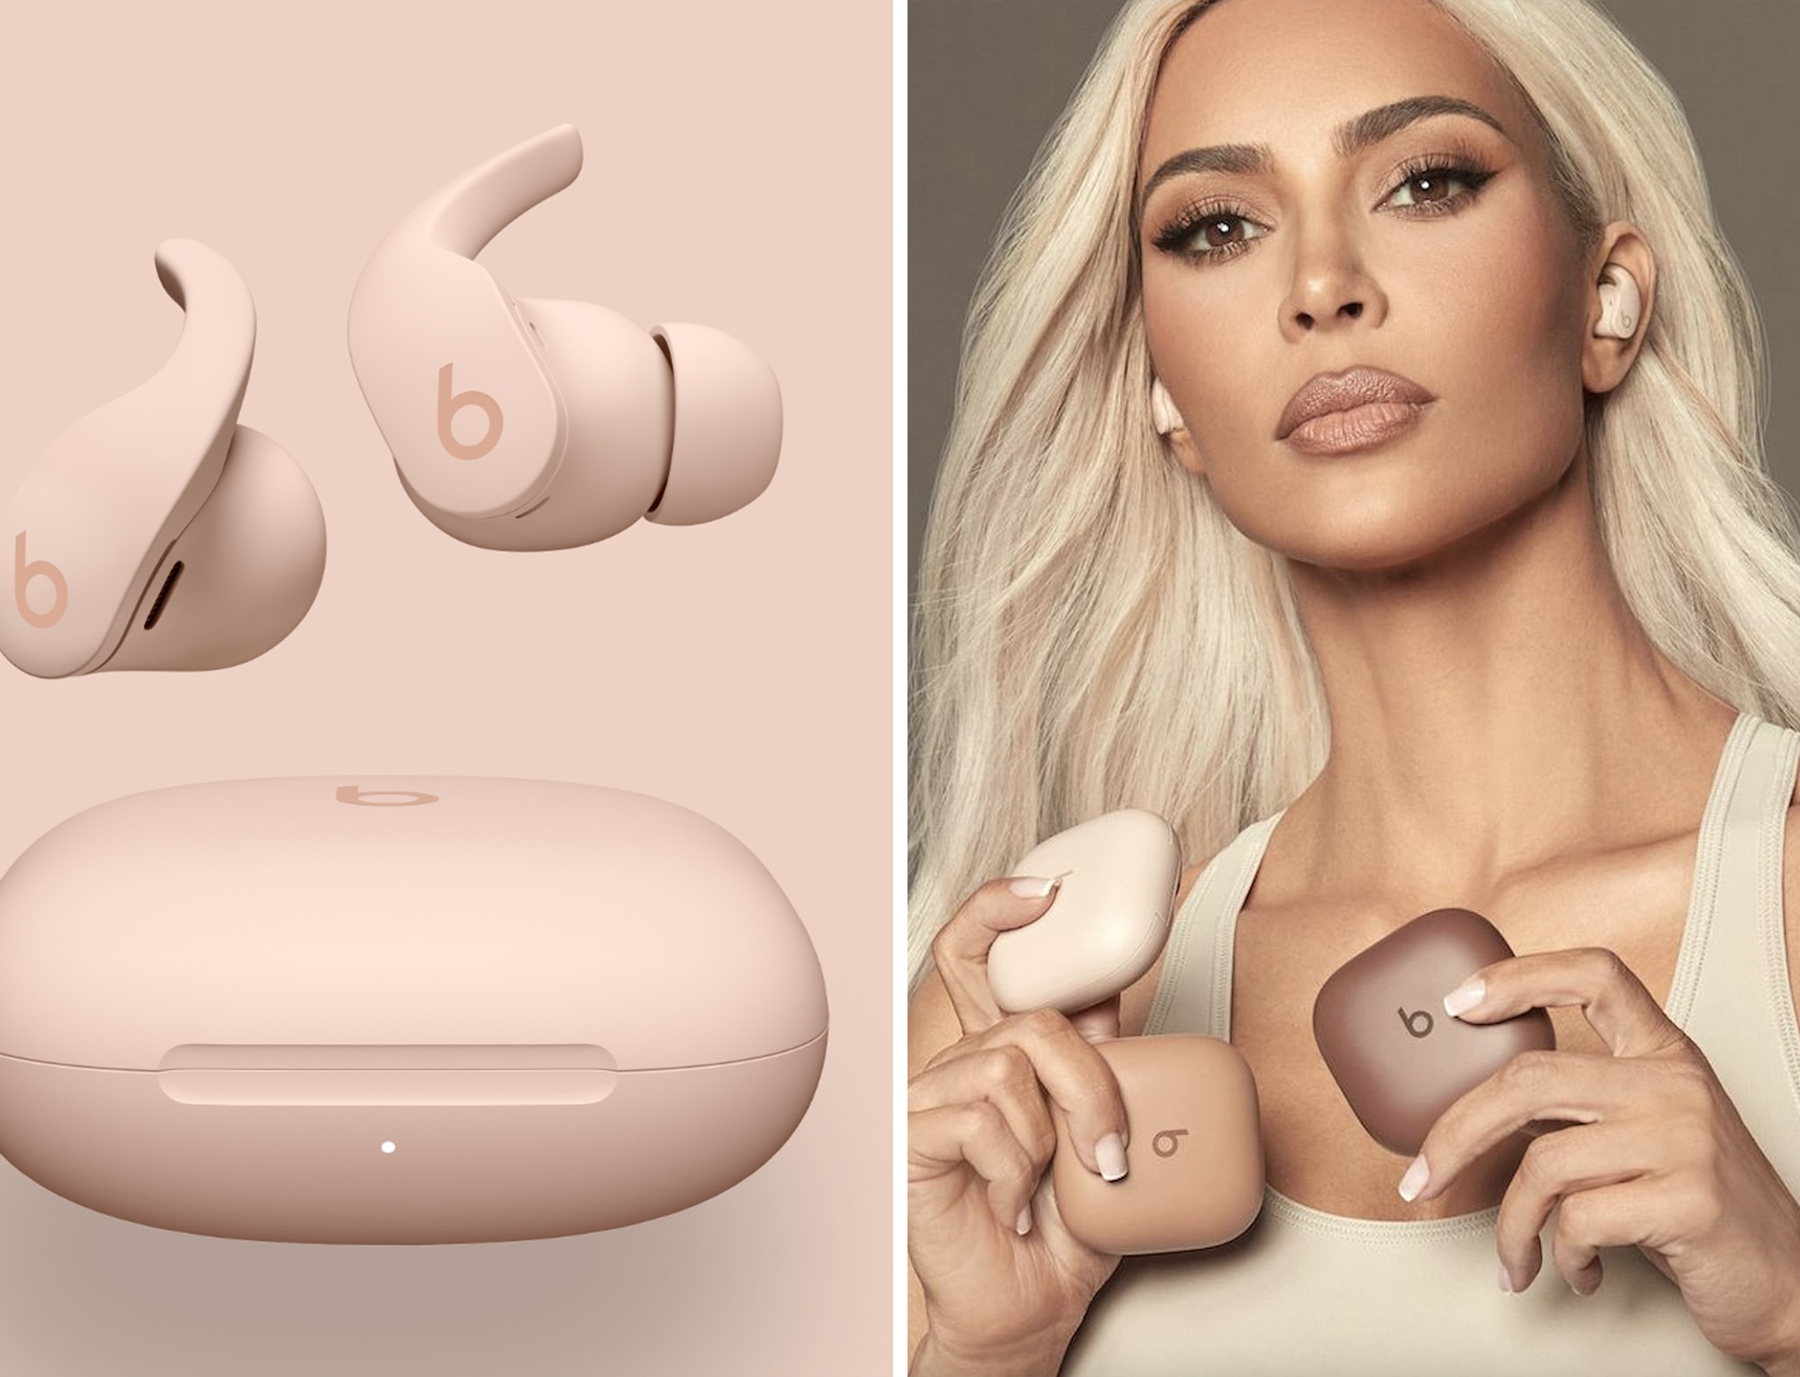 How To Buy The Beats x Kim Kardashian Collaboration